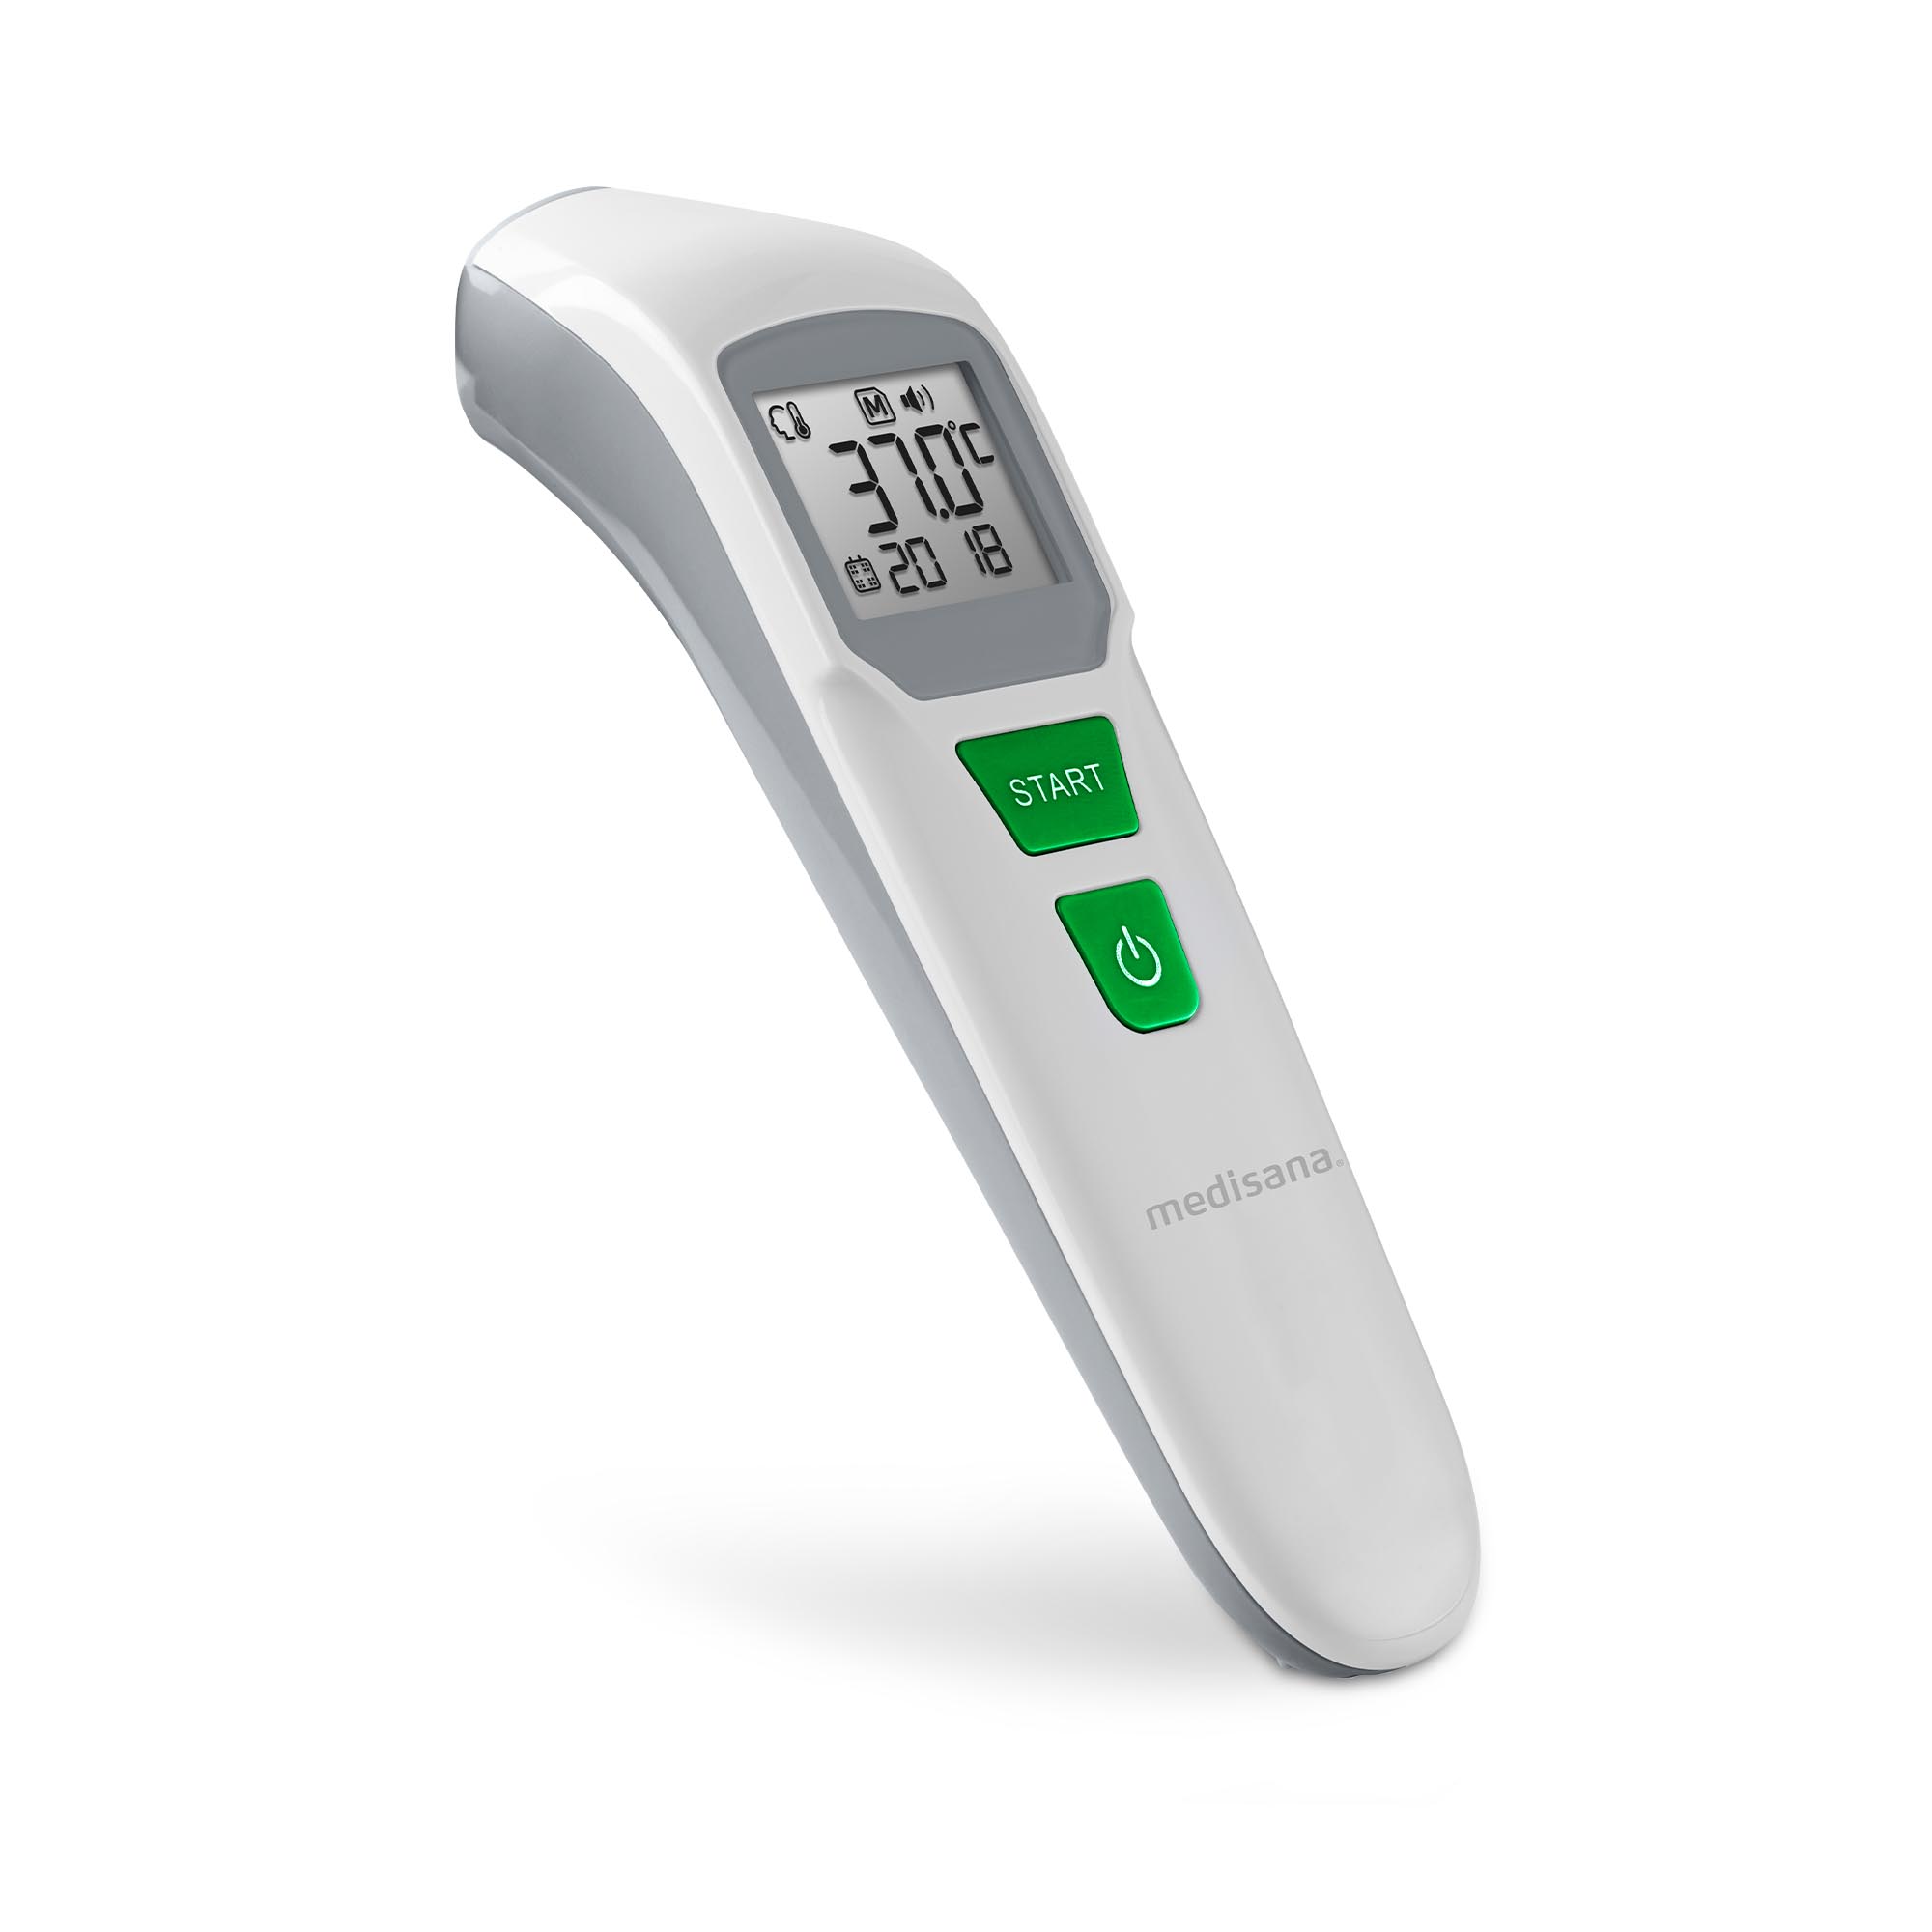 TM 760 Infrared Multifunctional Thermometer medisana®